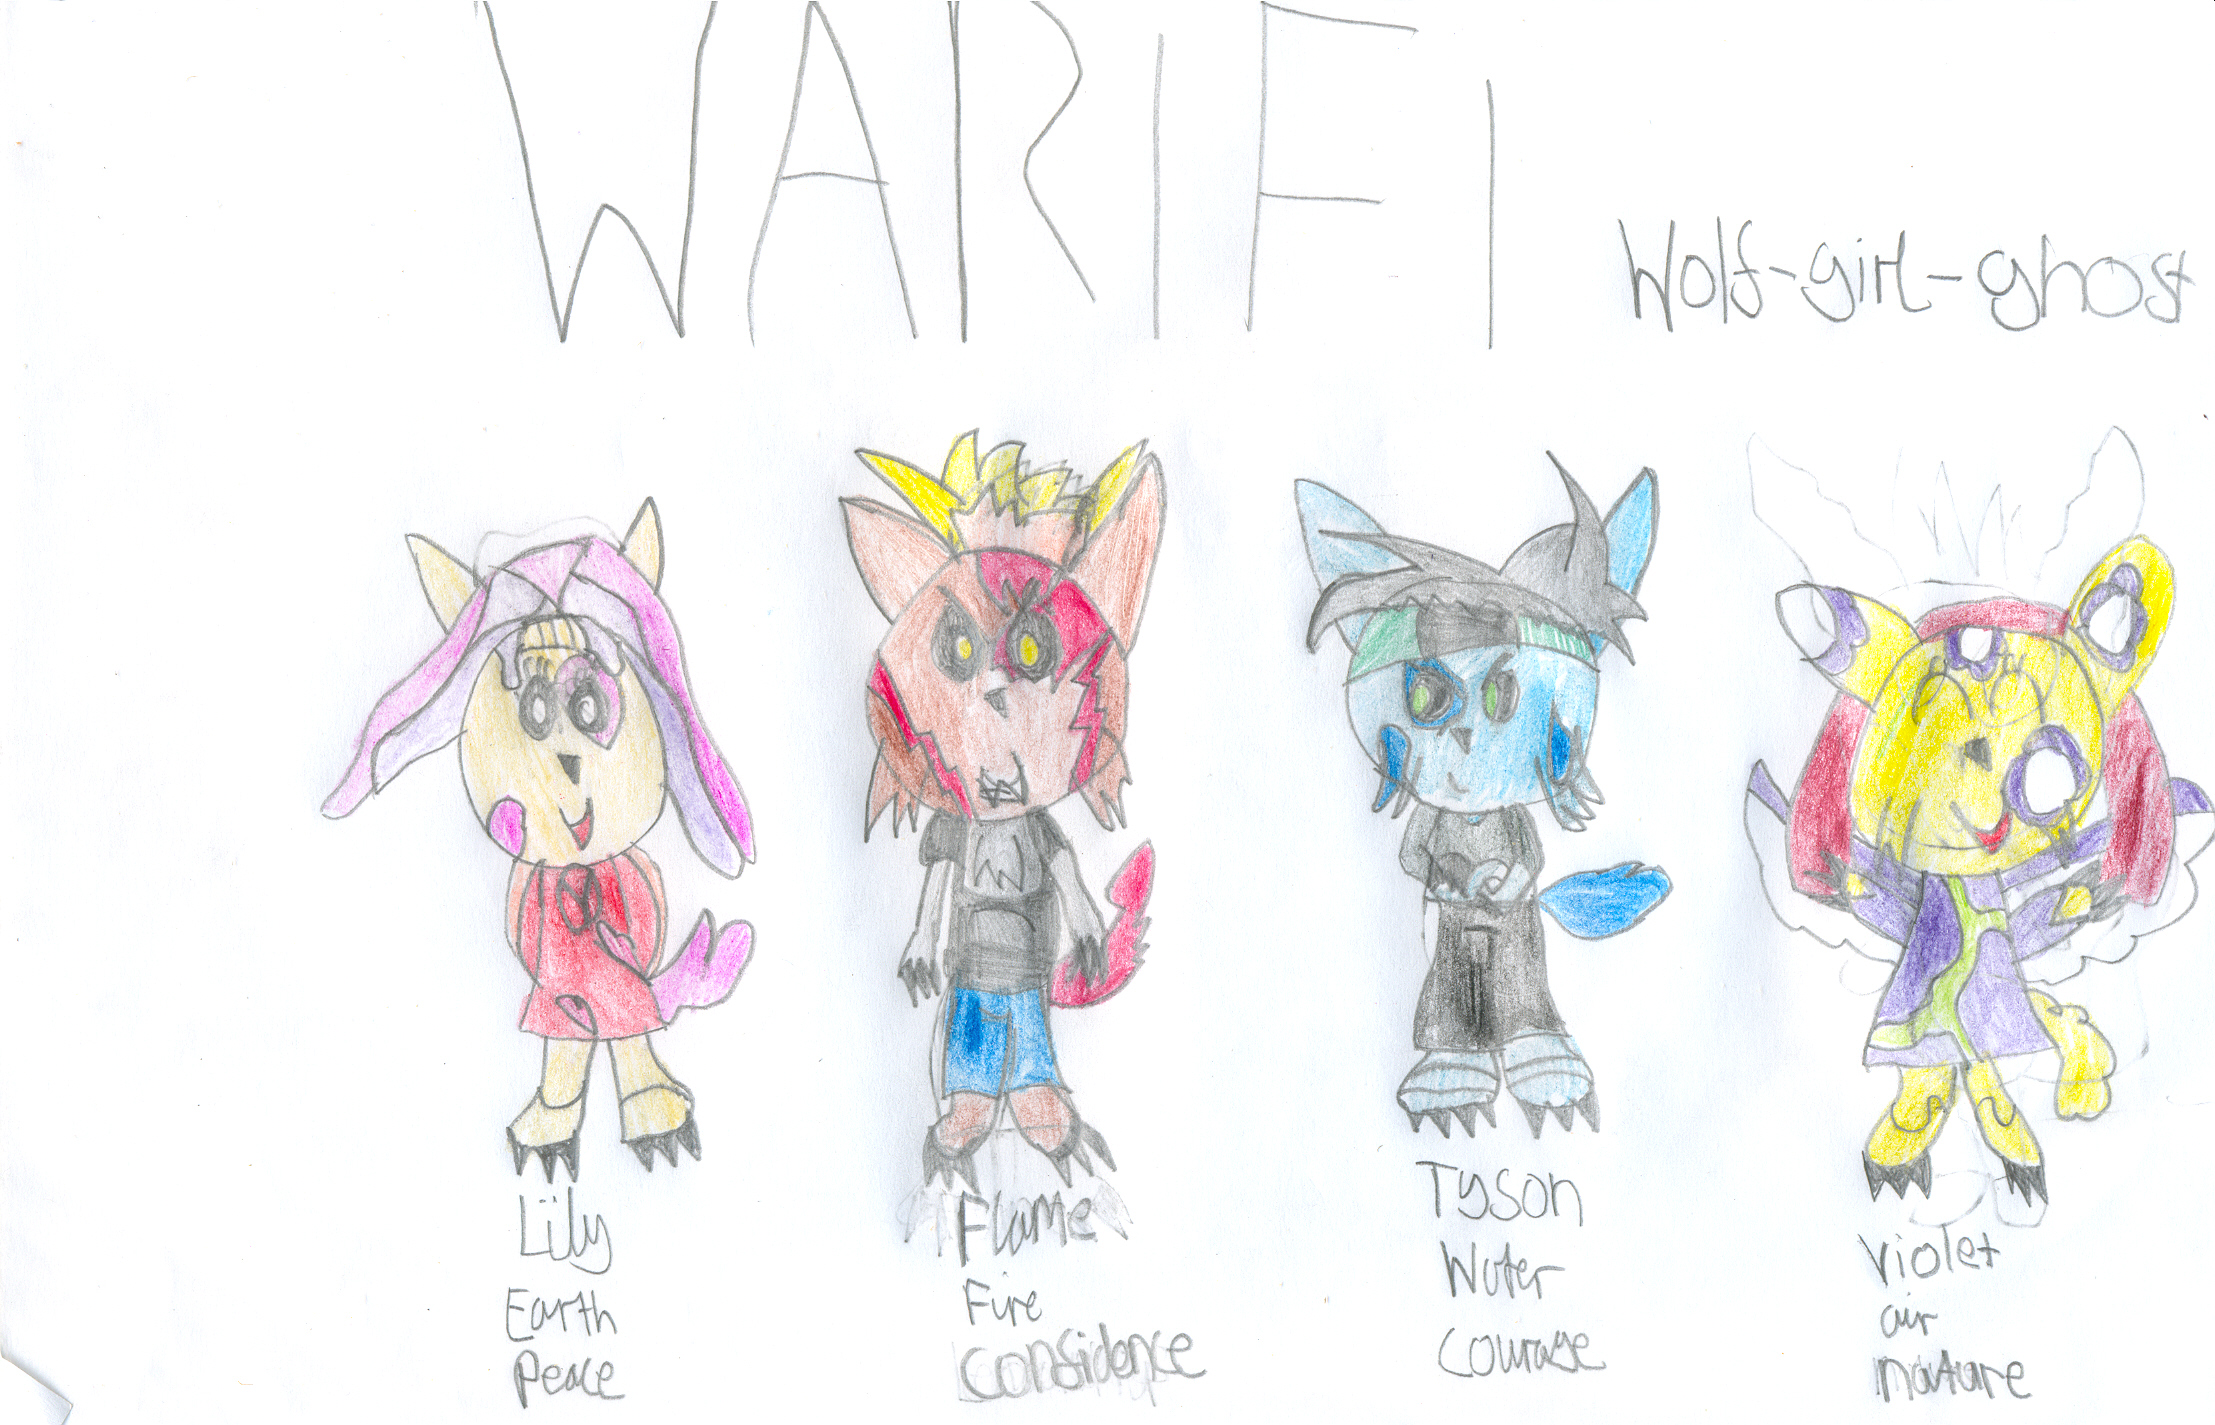 Warifi by wolf-girl-ghost